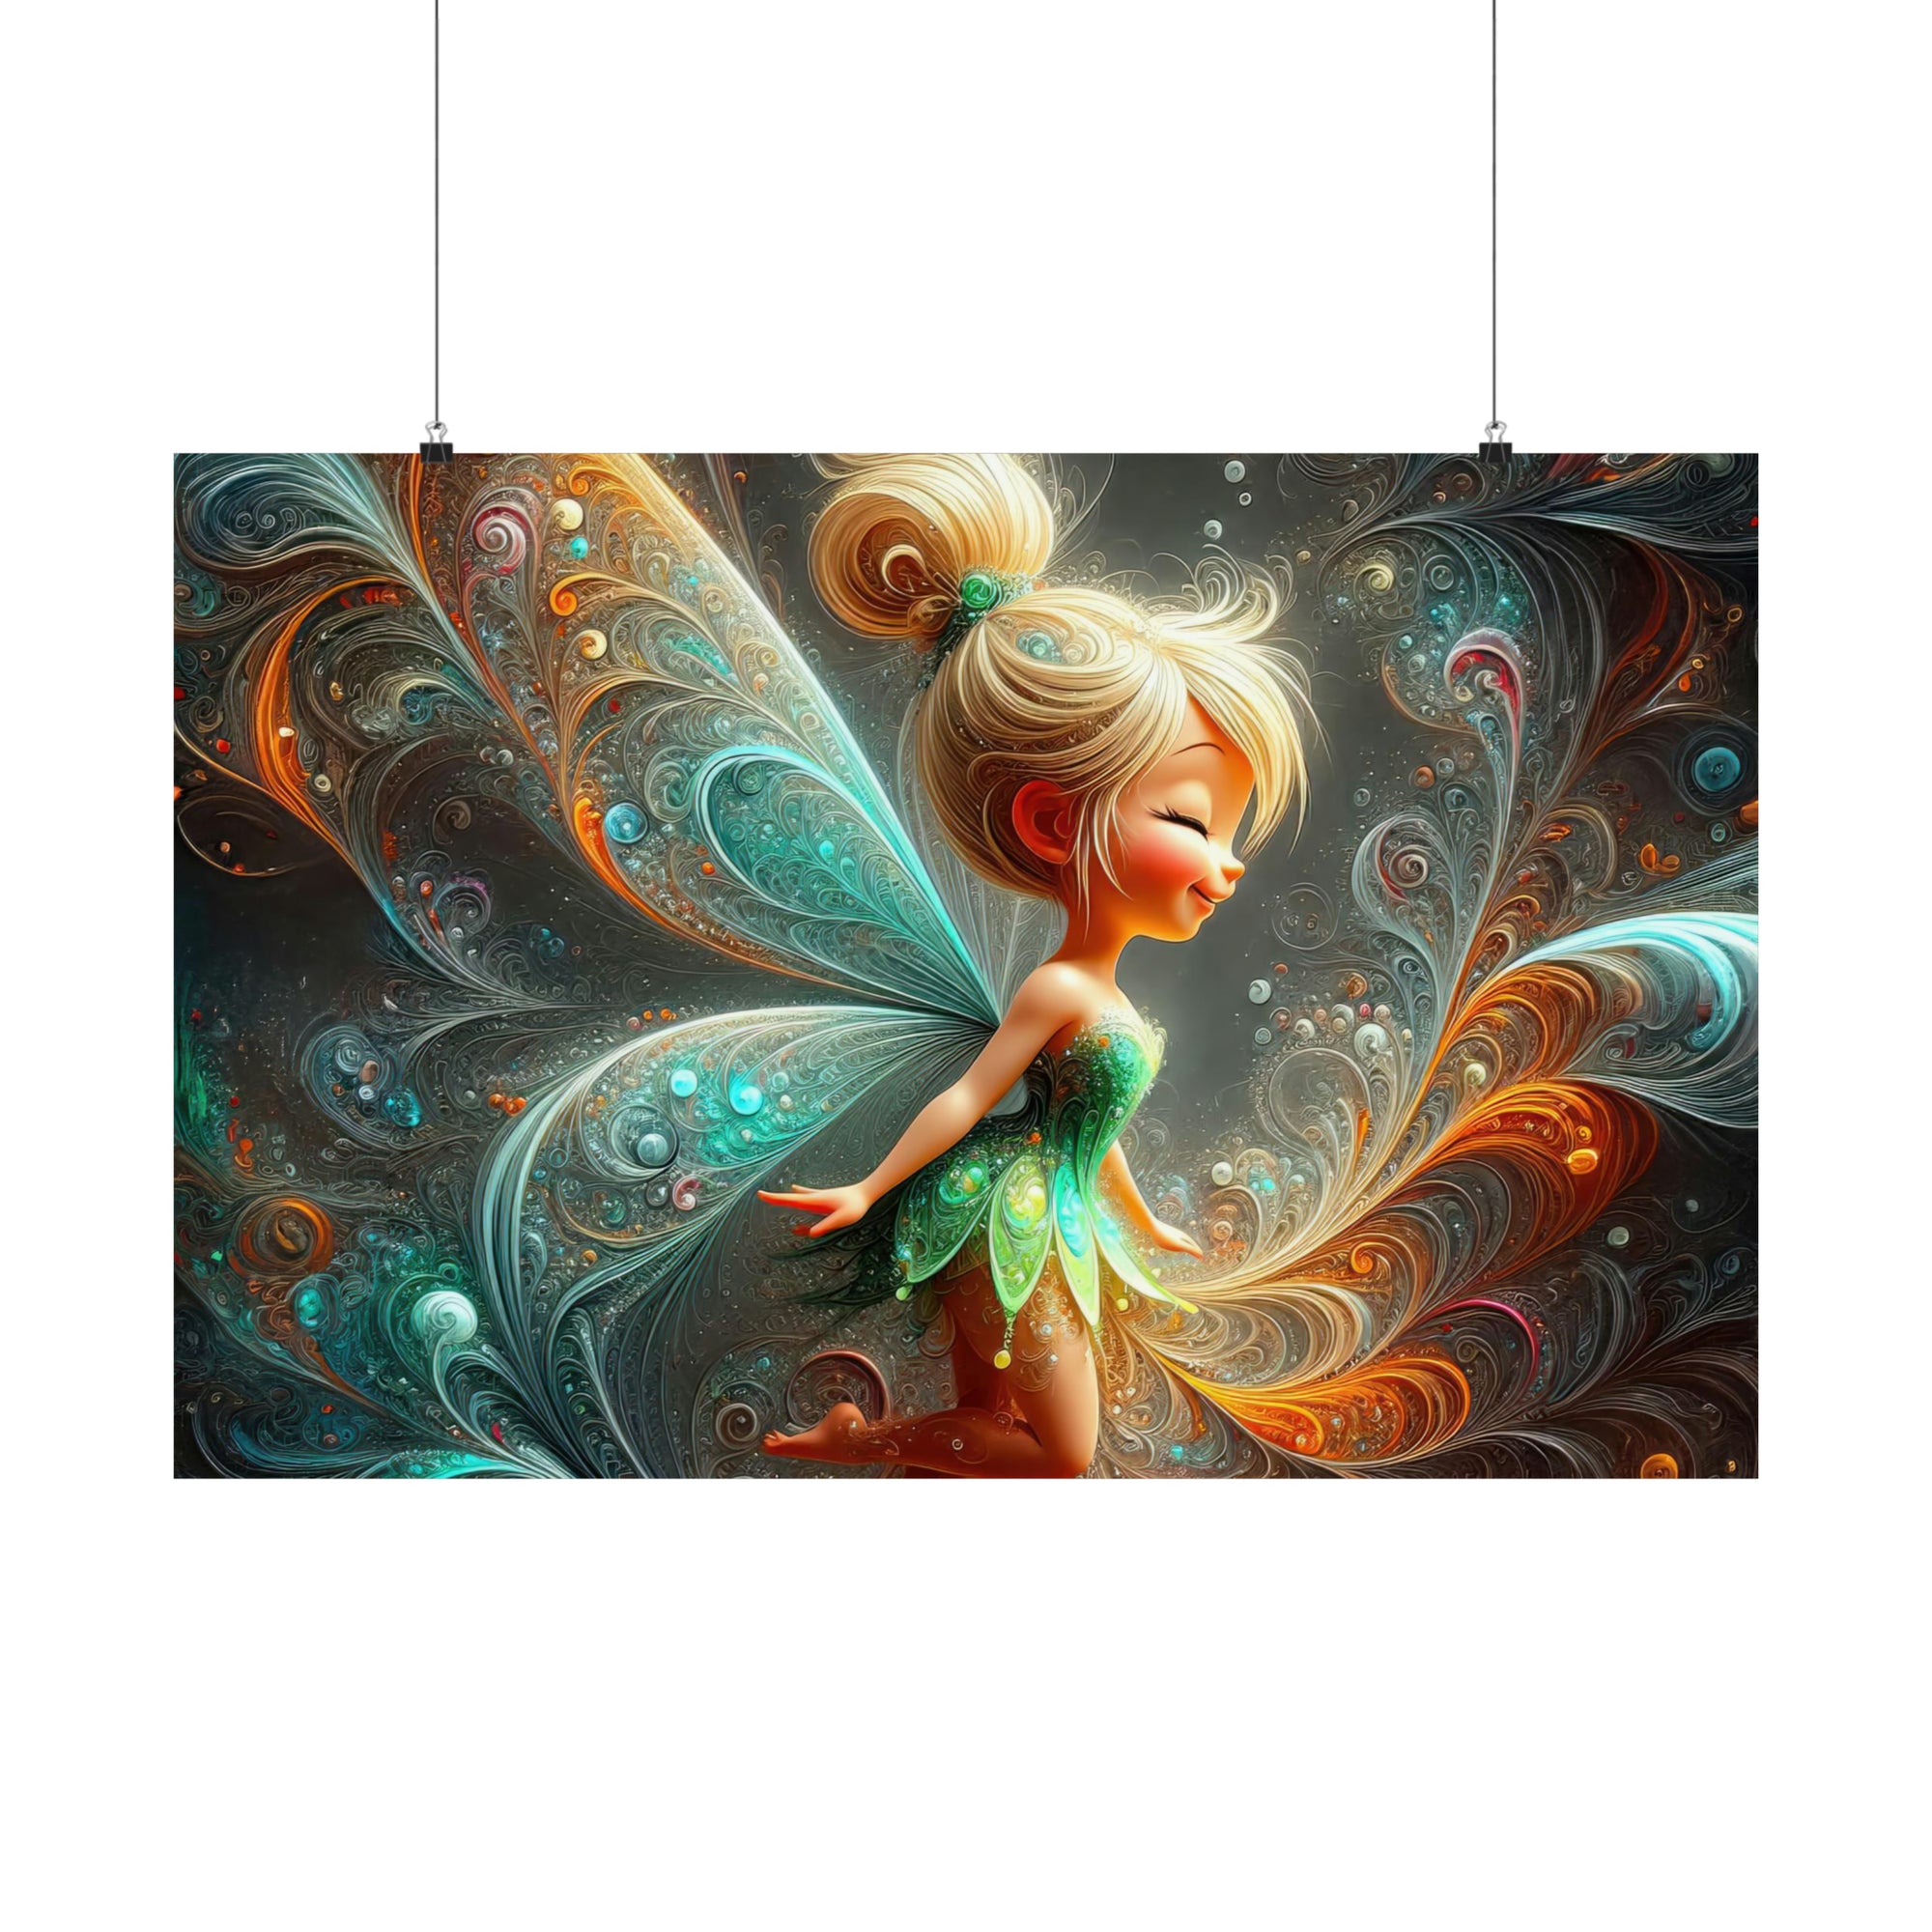 The Fairy's Dream Poster